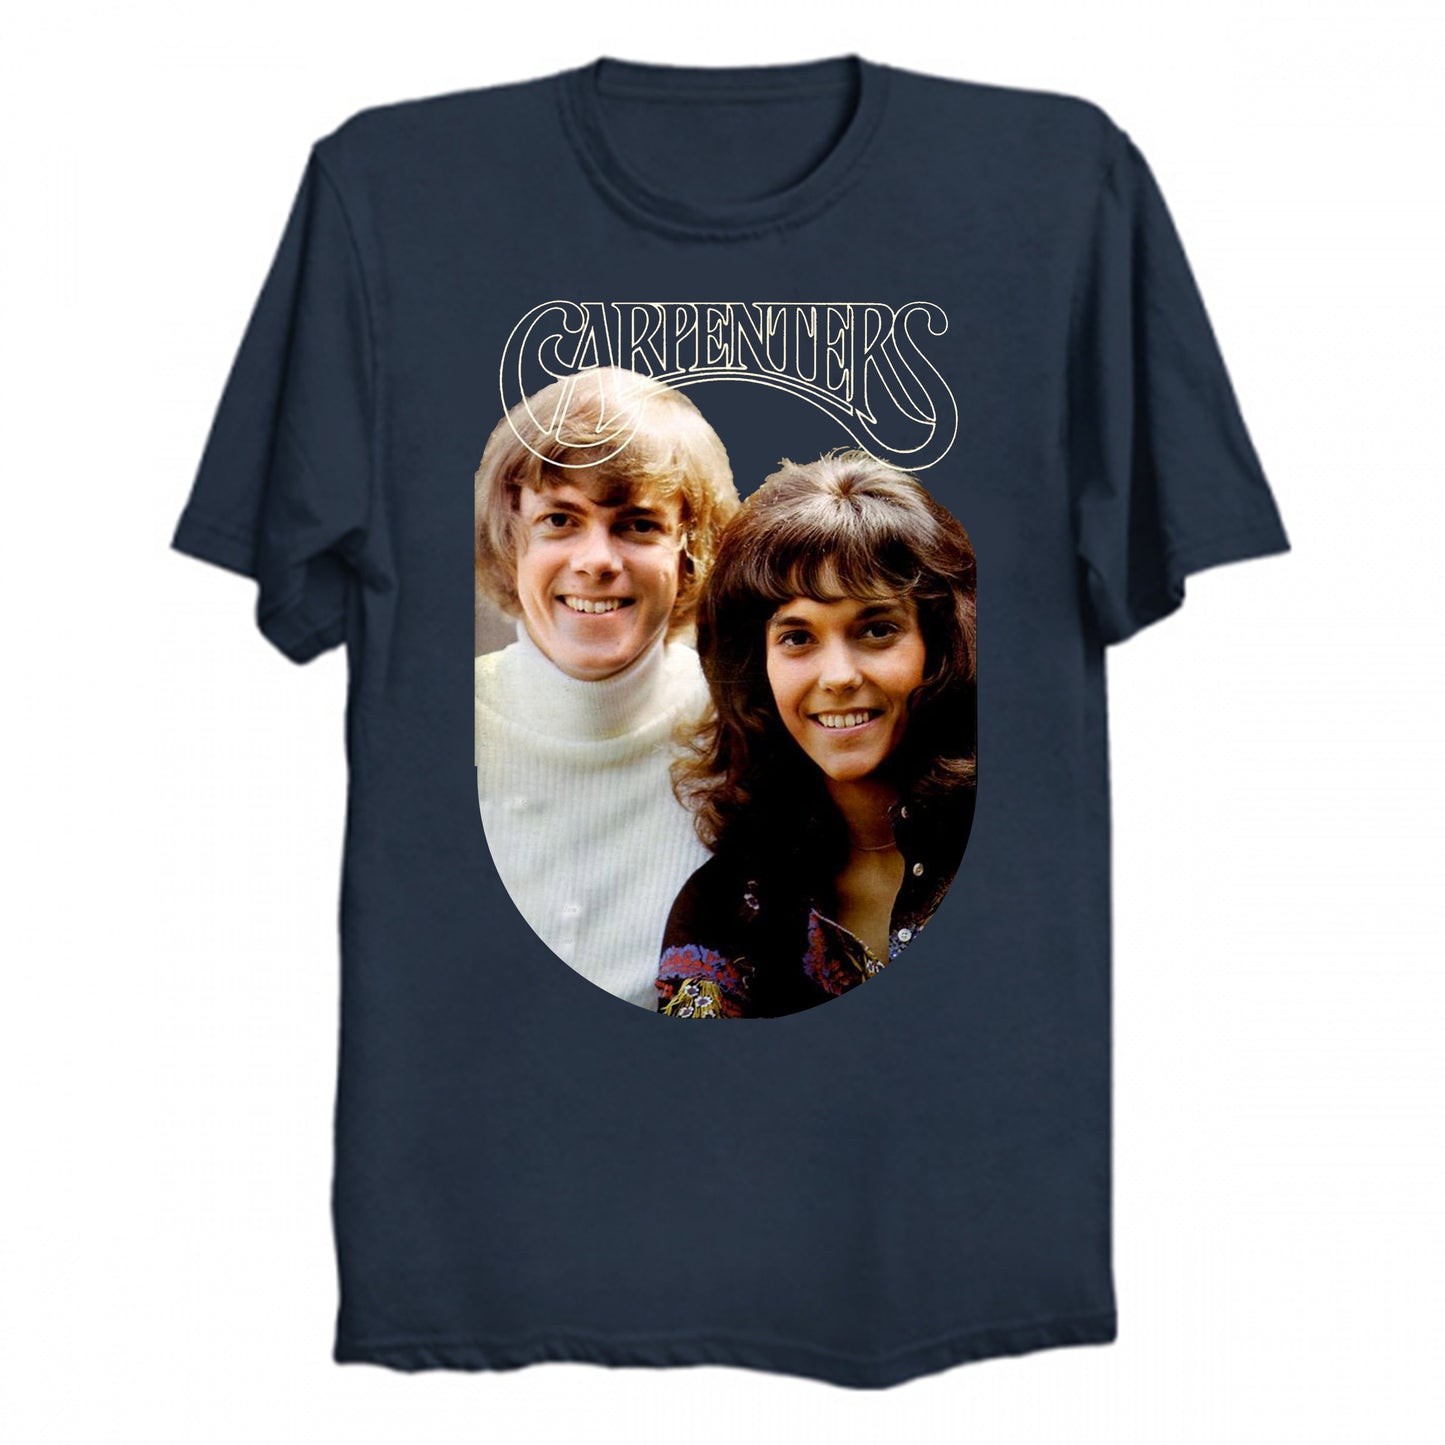 The Carpenters T-Shirt